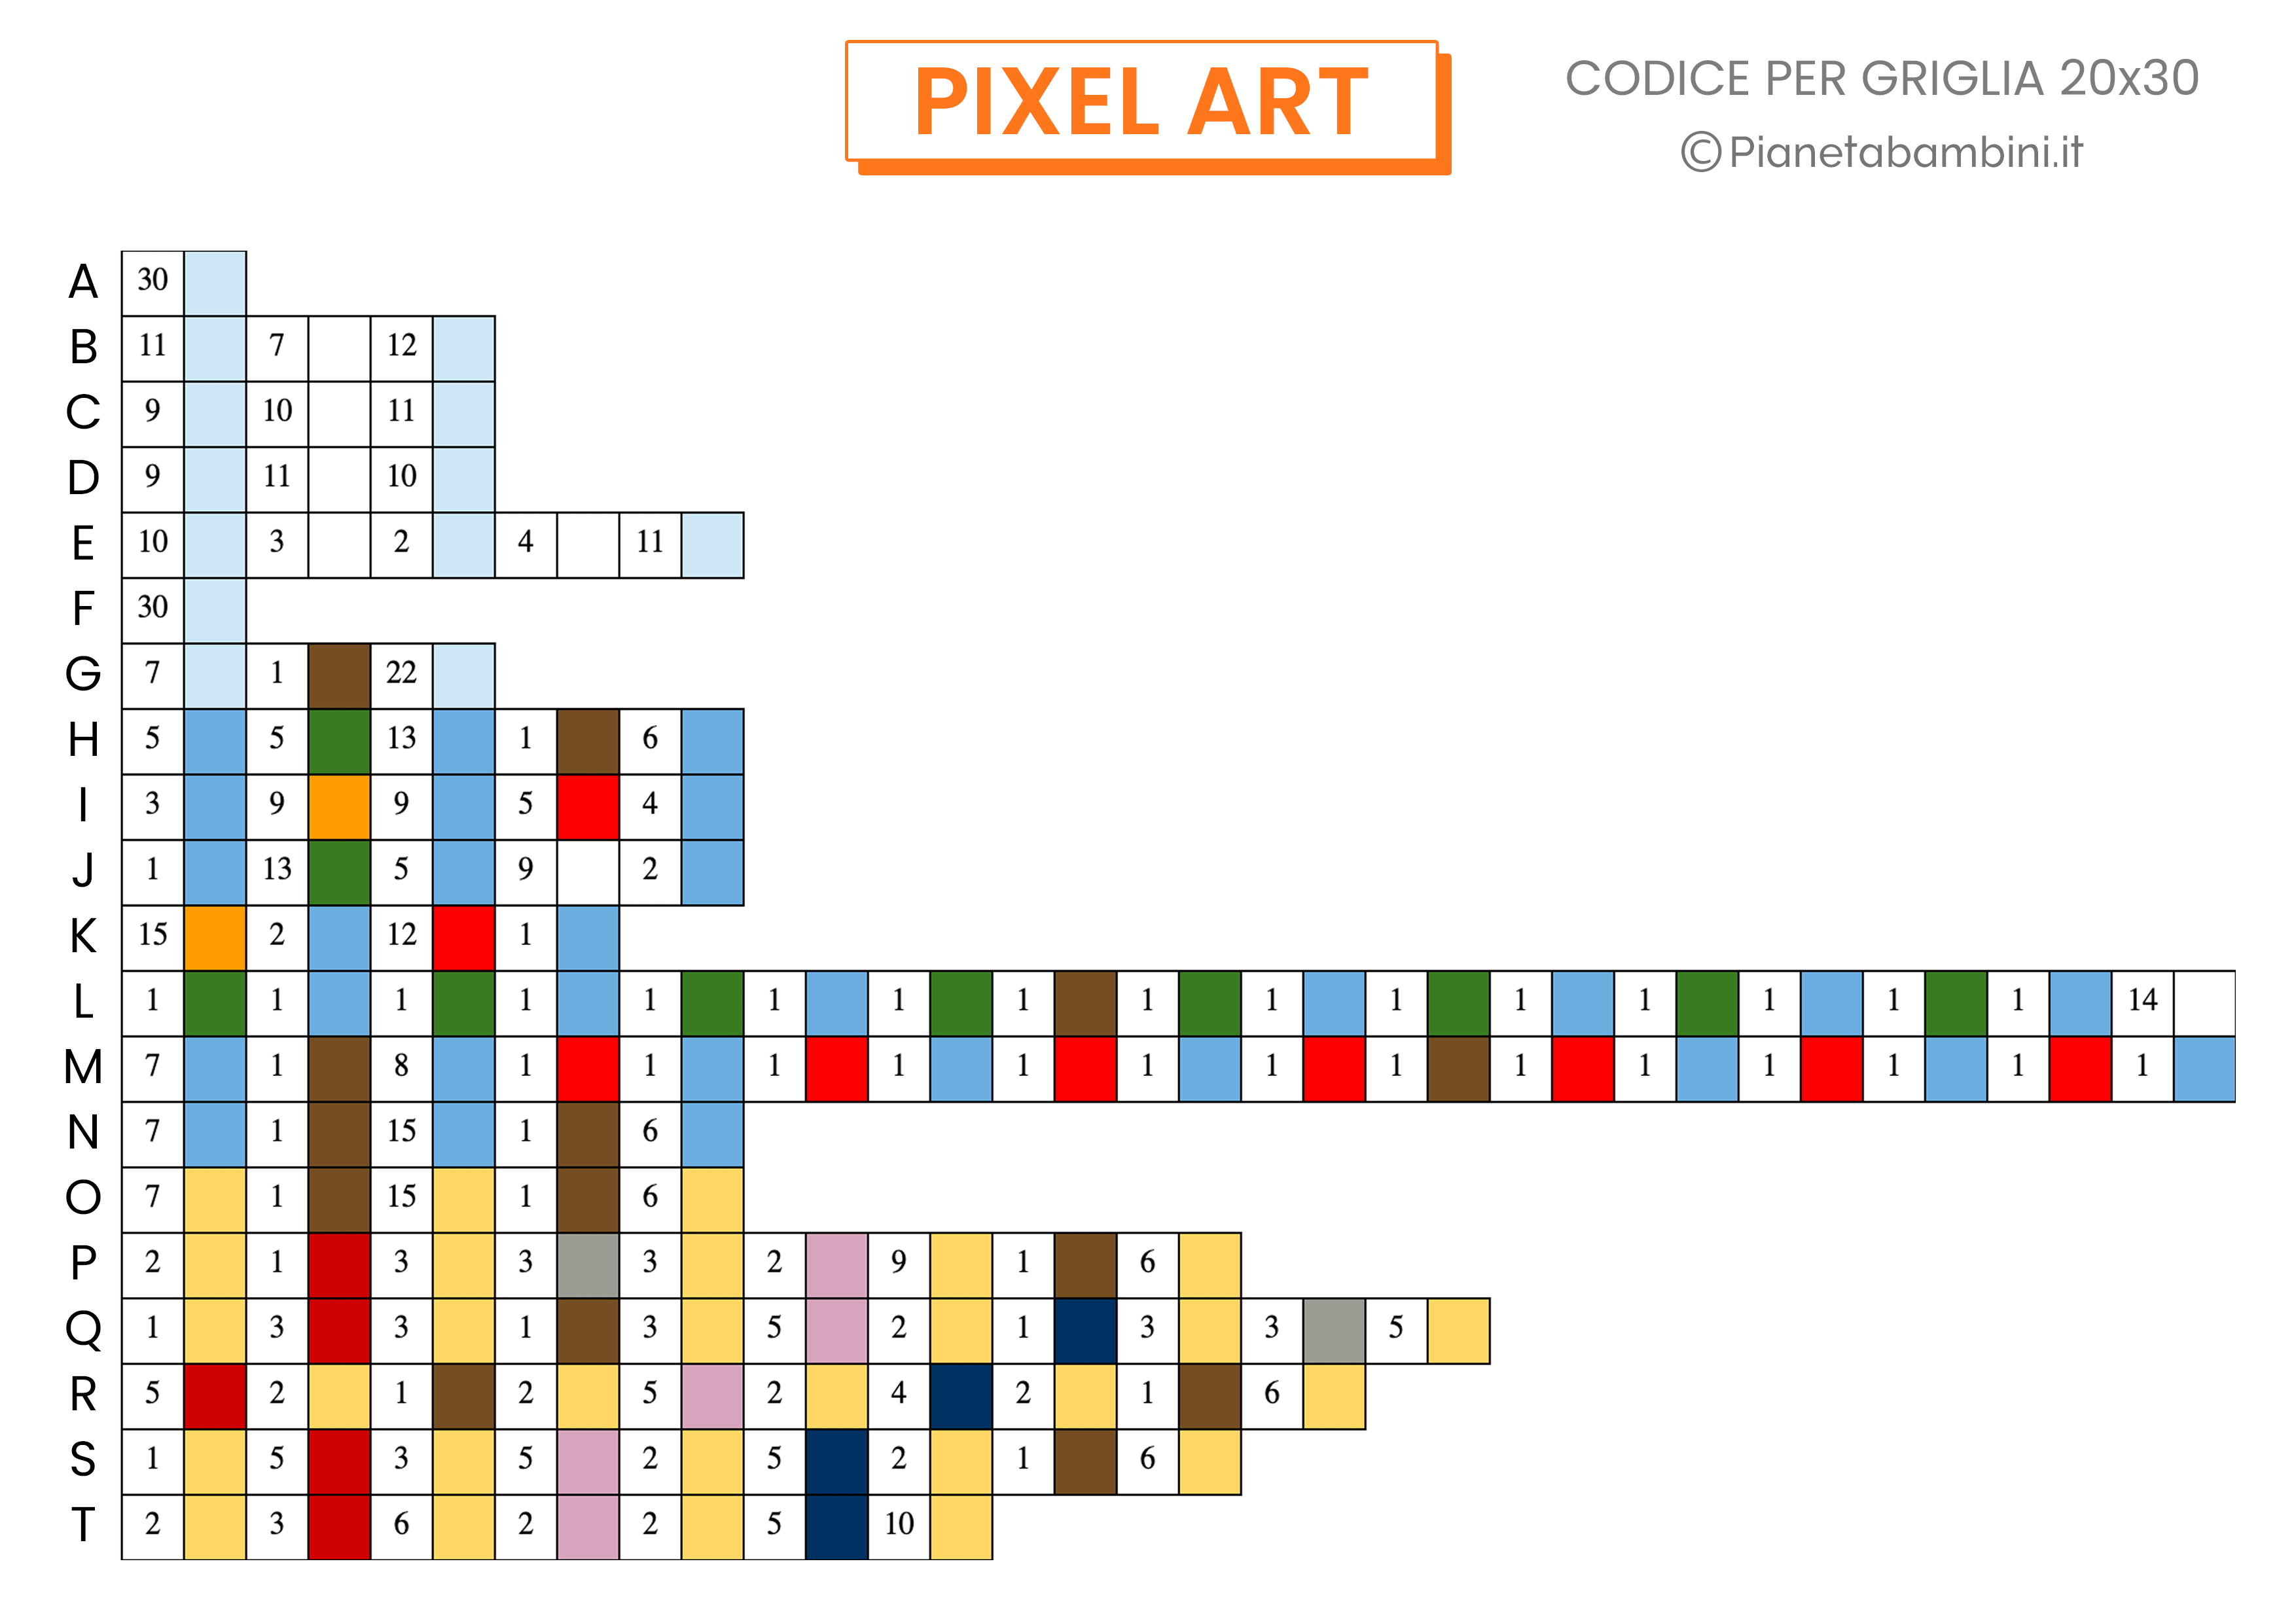 Pixel Art estate codice difficile 01